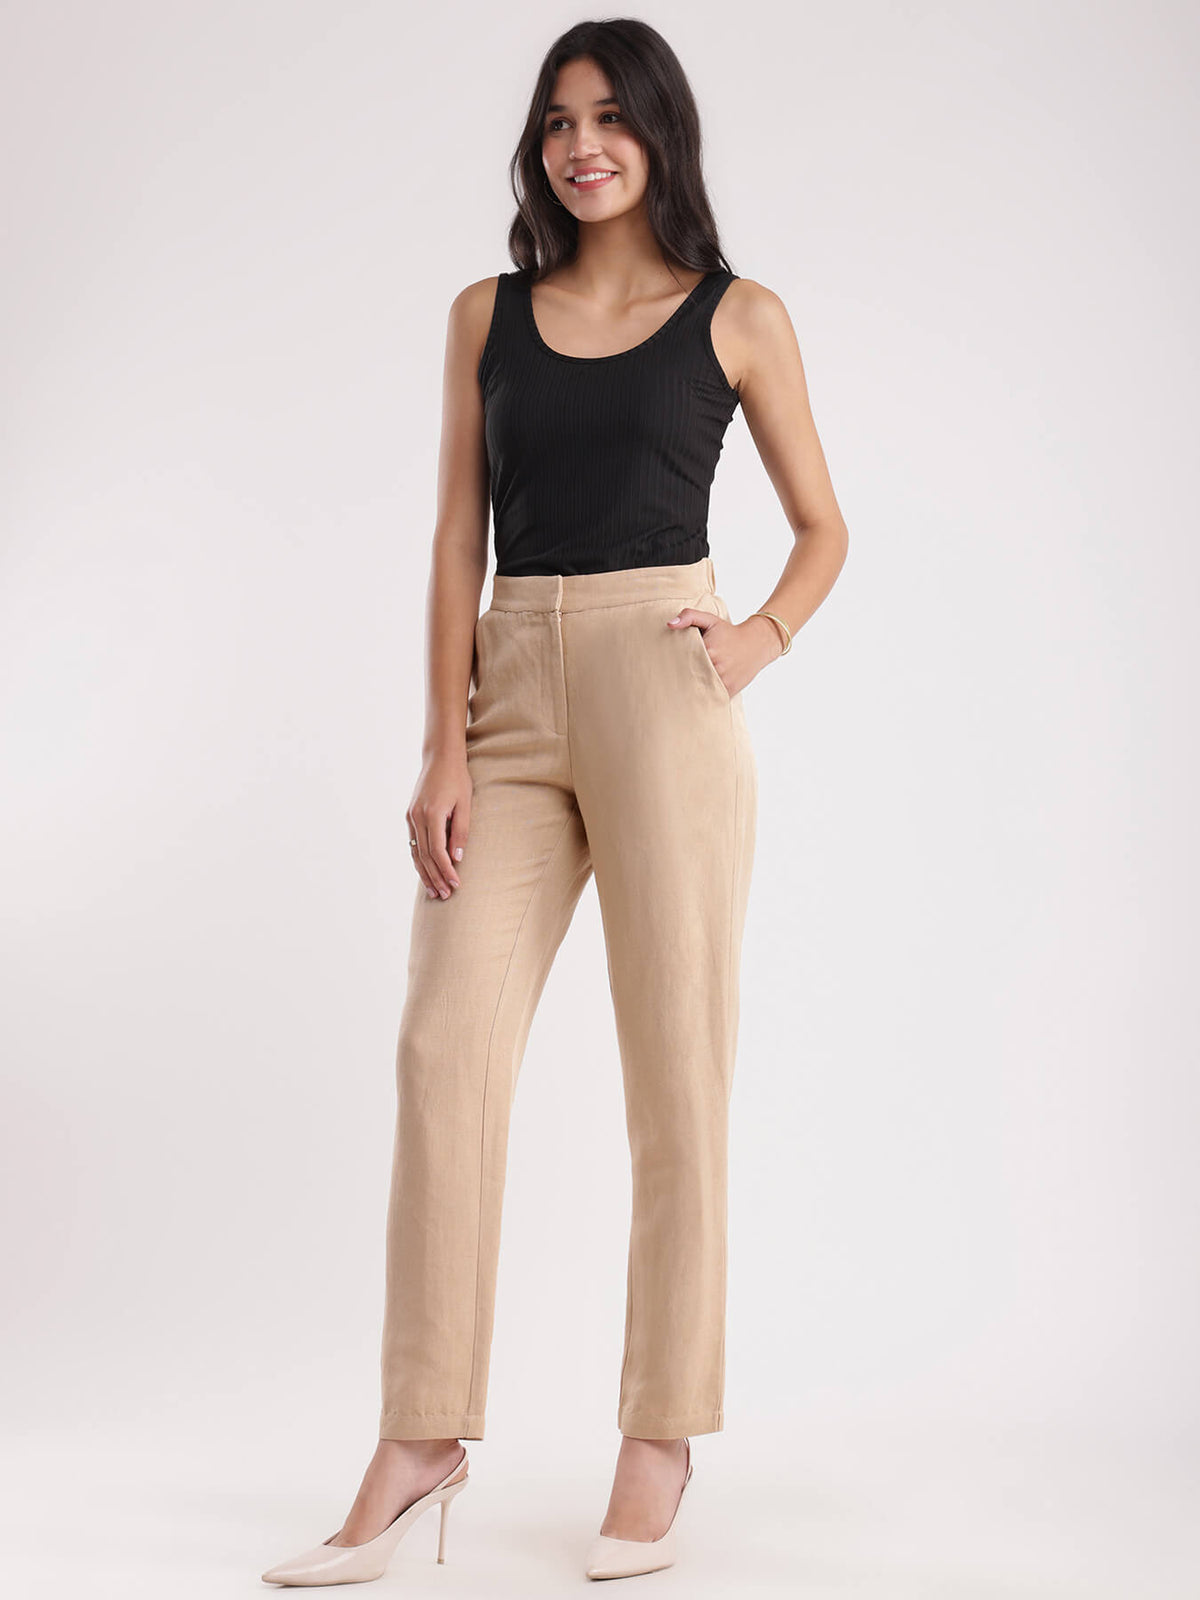 Linen Elasticated Straight Fit Pants - Beige